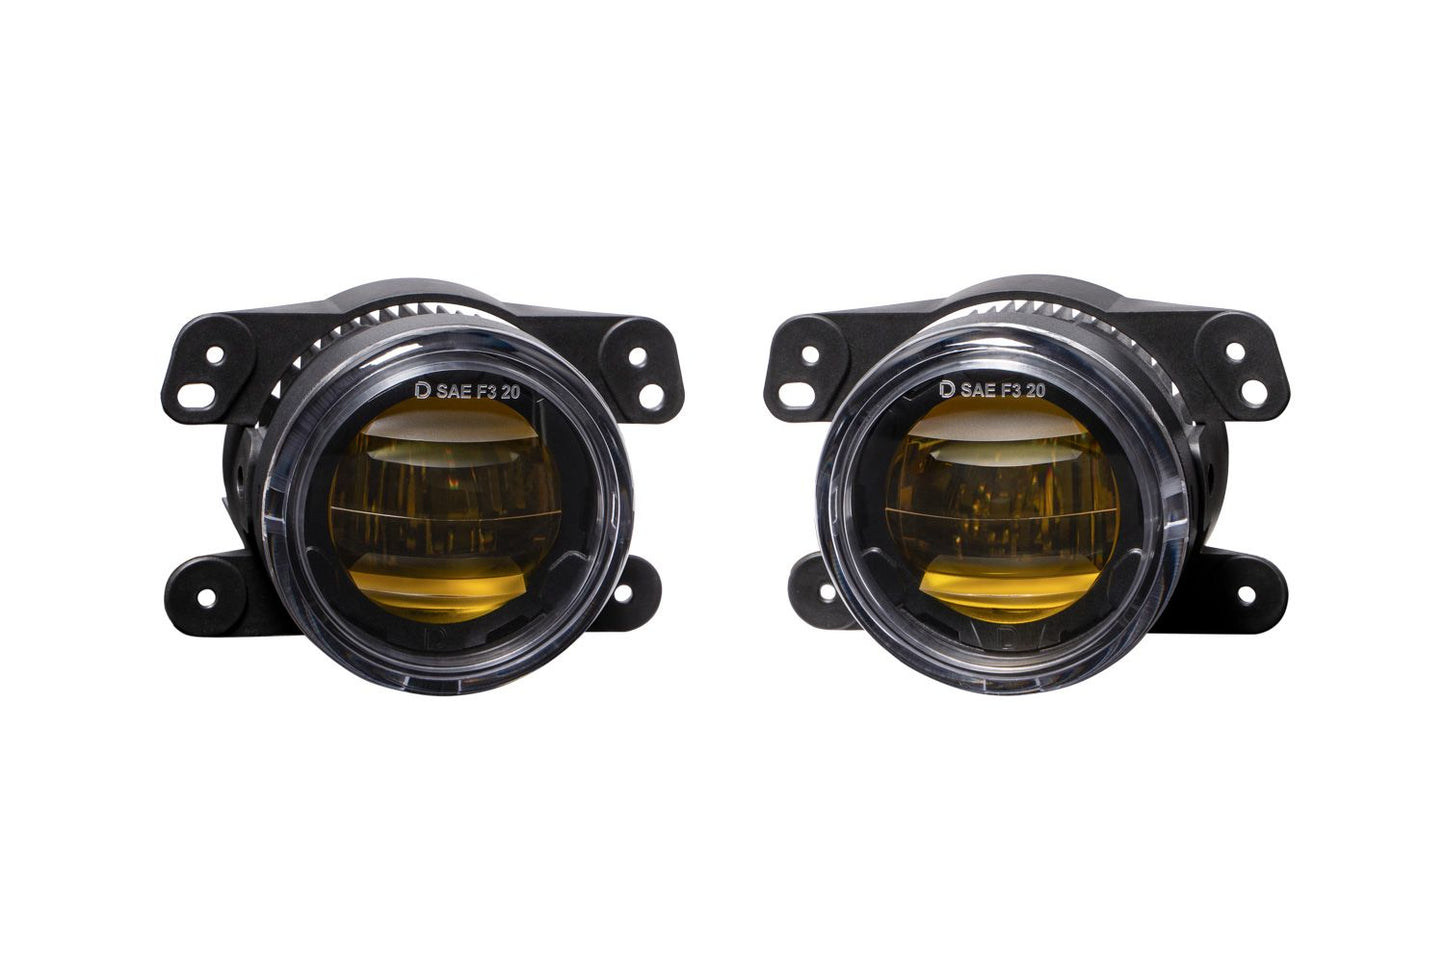 Diode Dynamics Elite Series LED Fog Light Kit (JEEP)